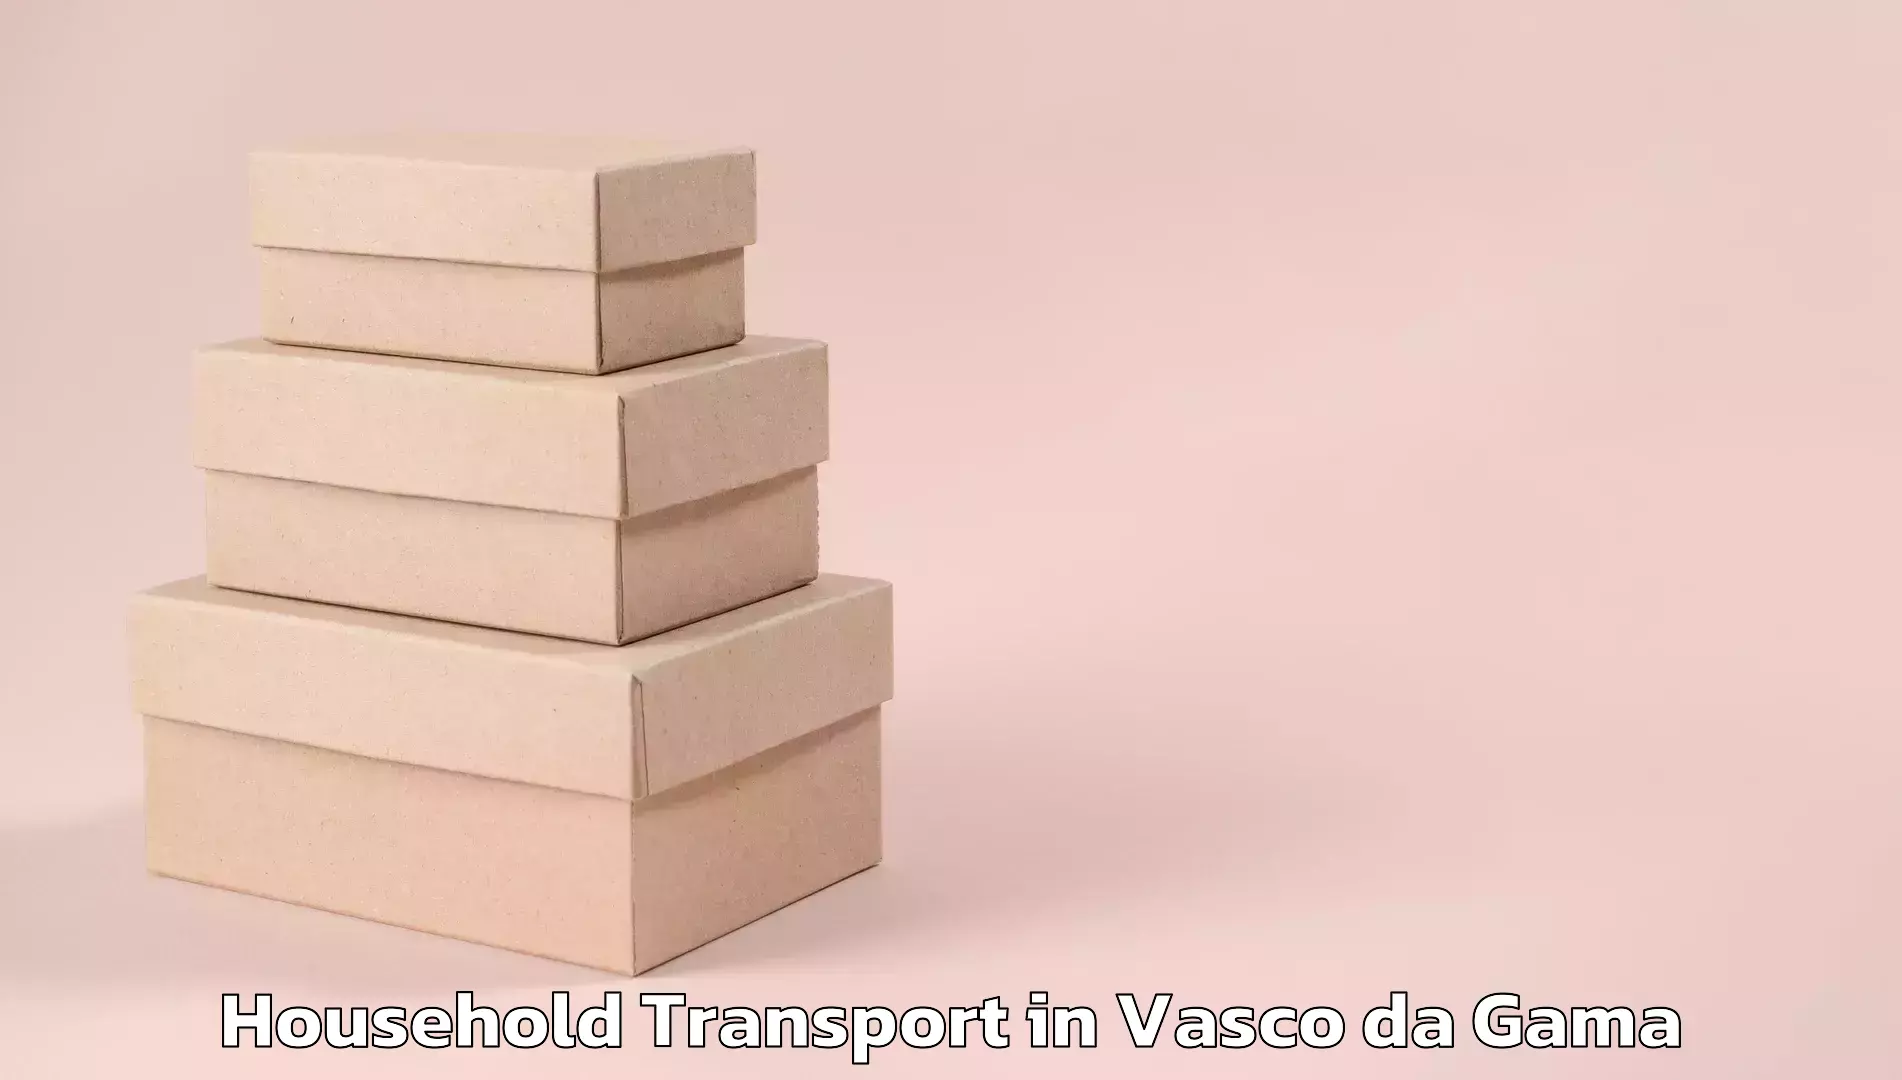 Quality relocation services in Vasco da Gama